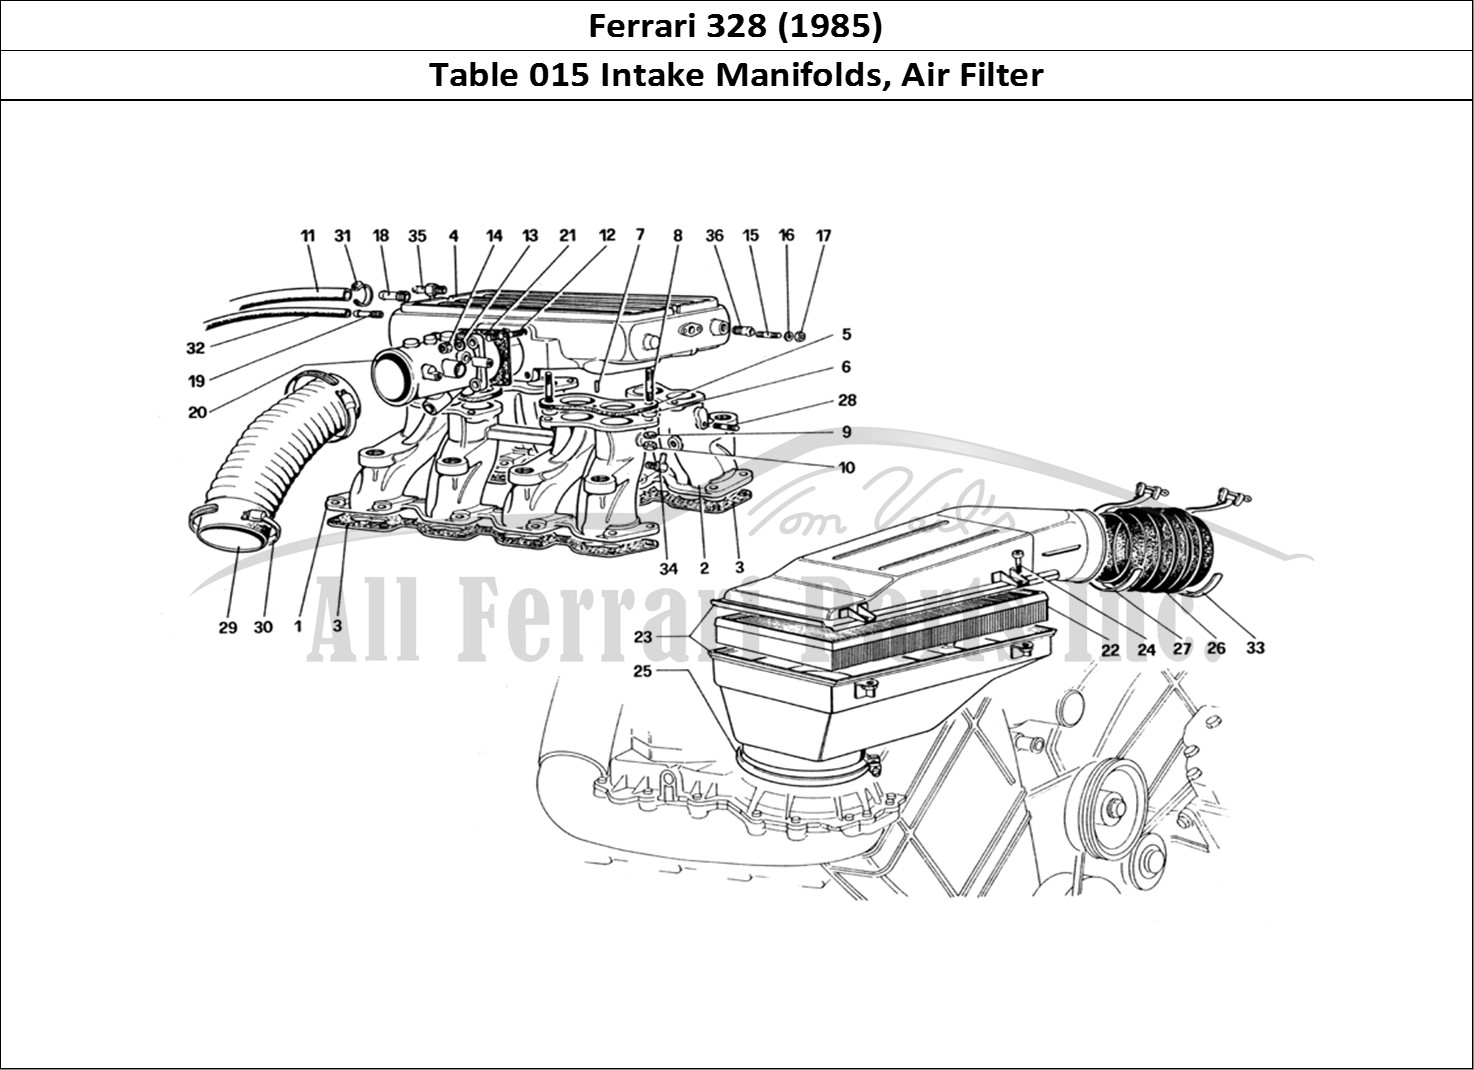 Ferrari Parts Ferrari 328 (1985) Page 015 Air Intake and Manifolds